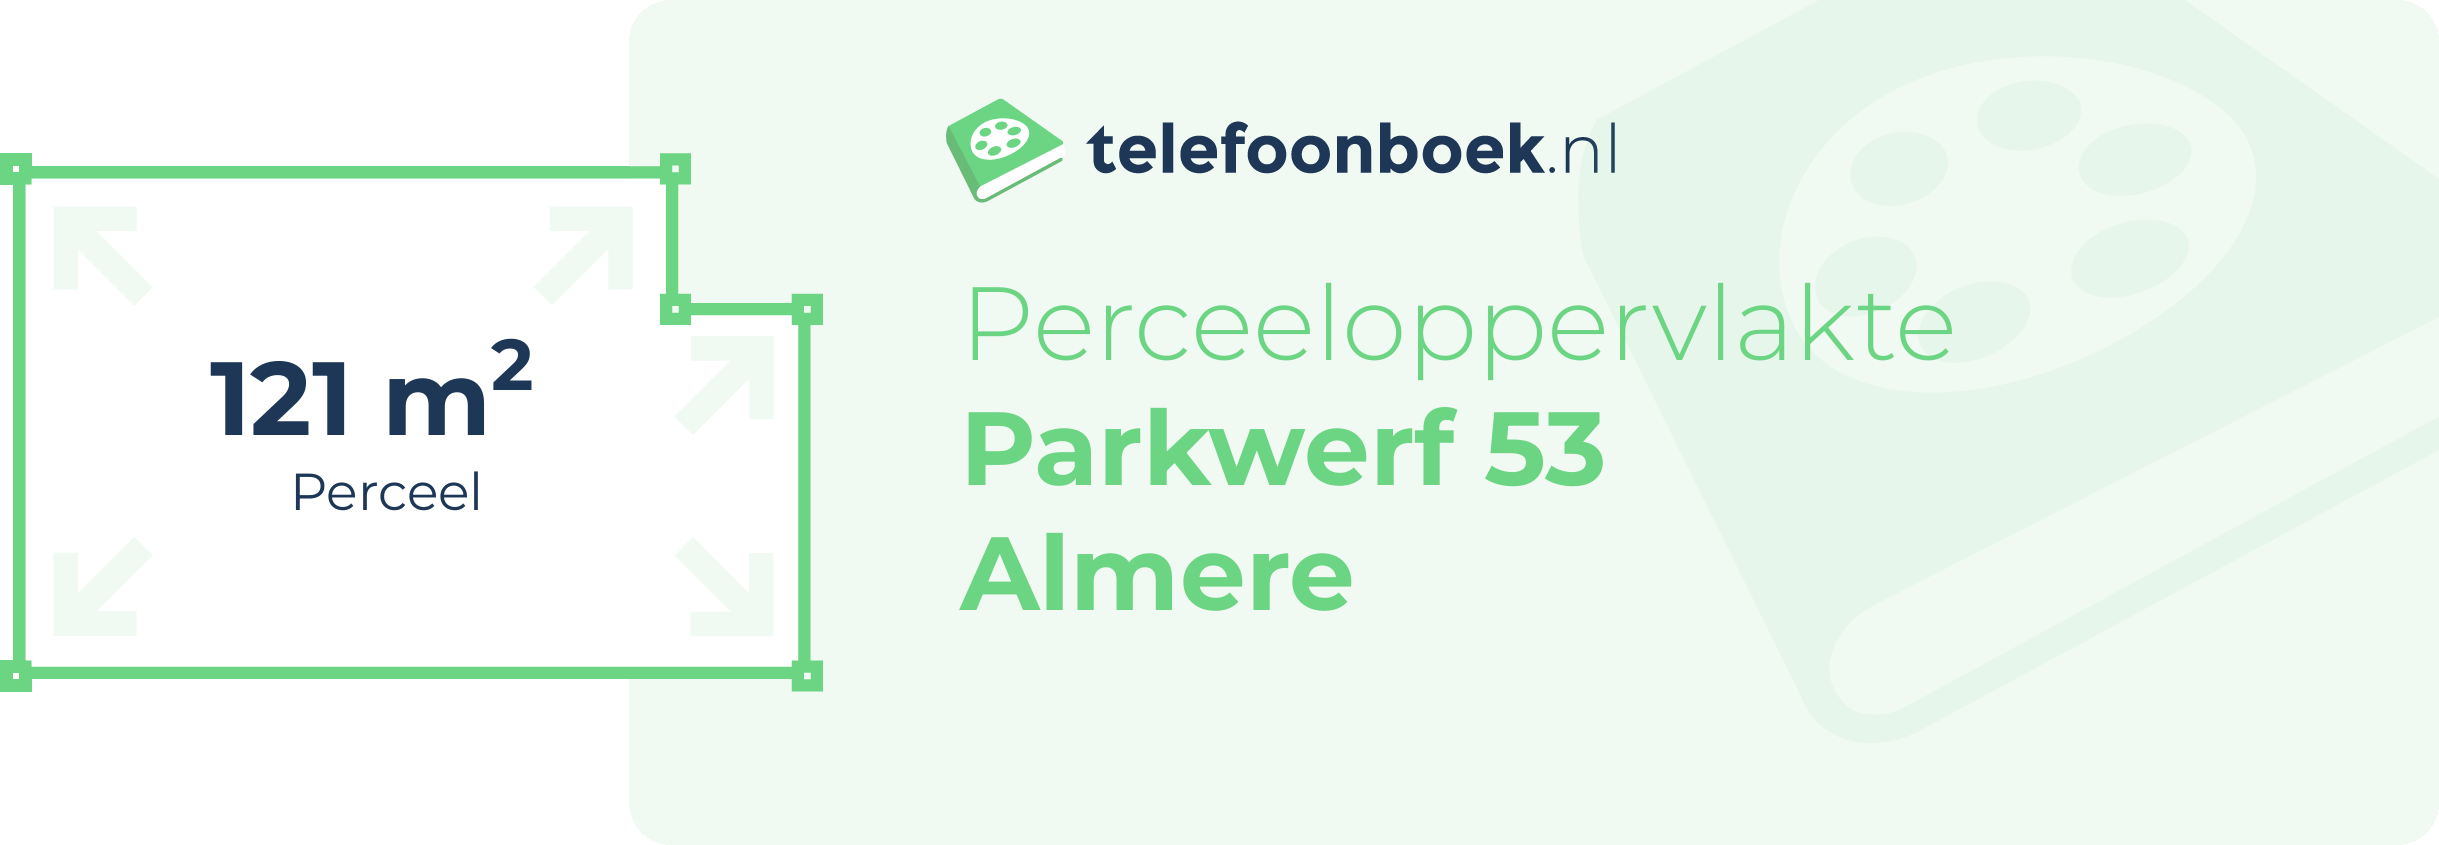 Perceeloppervlakte Parkwerf 53 Almere